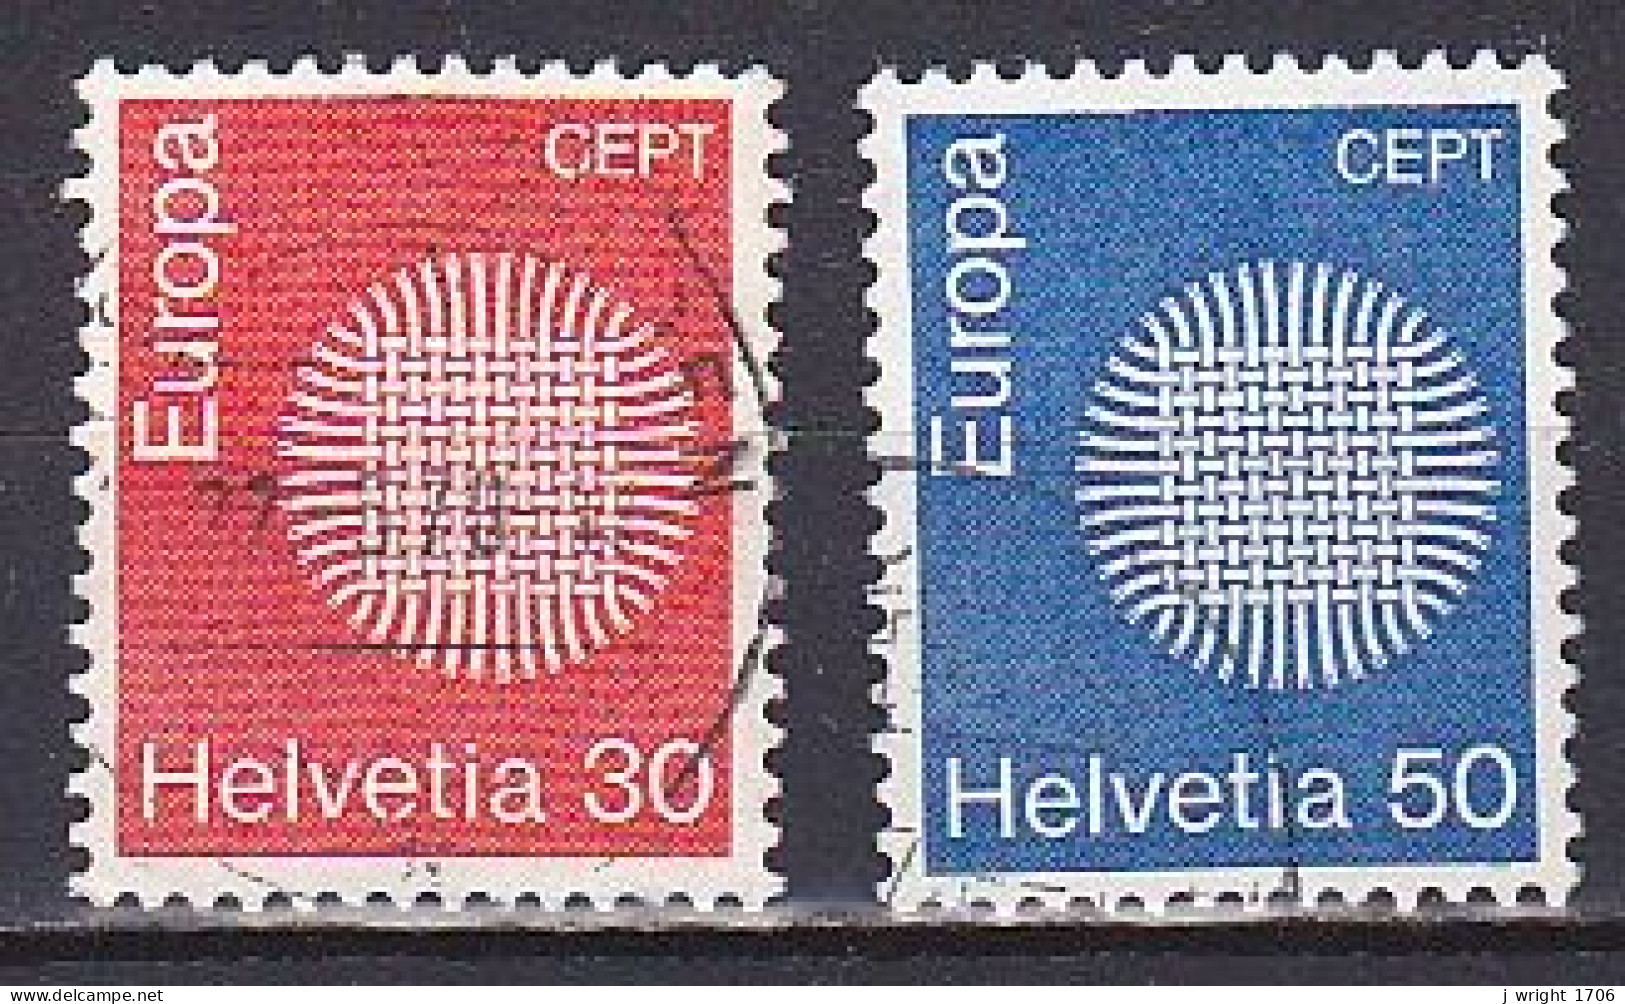 Switzerland, 1970, Europa CEPT, Set, USED - Oblitérés